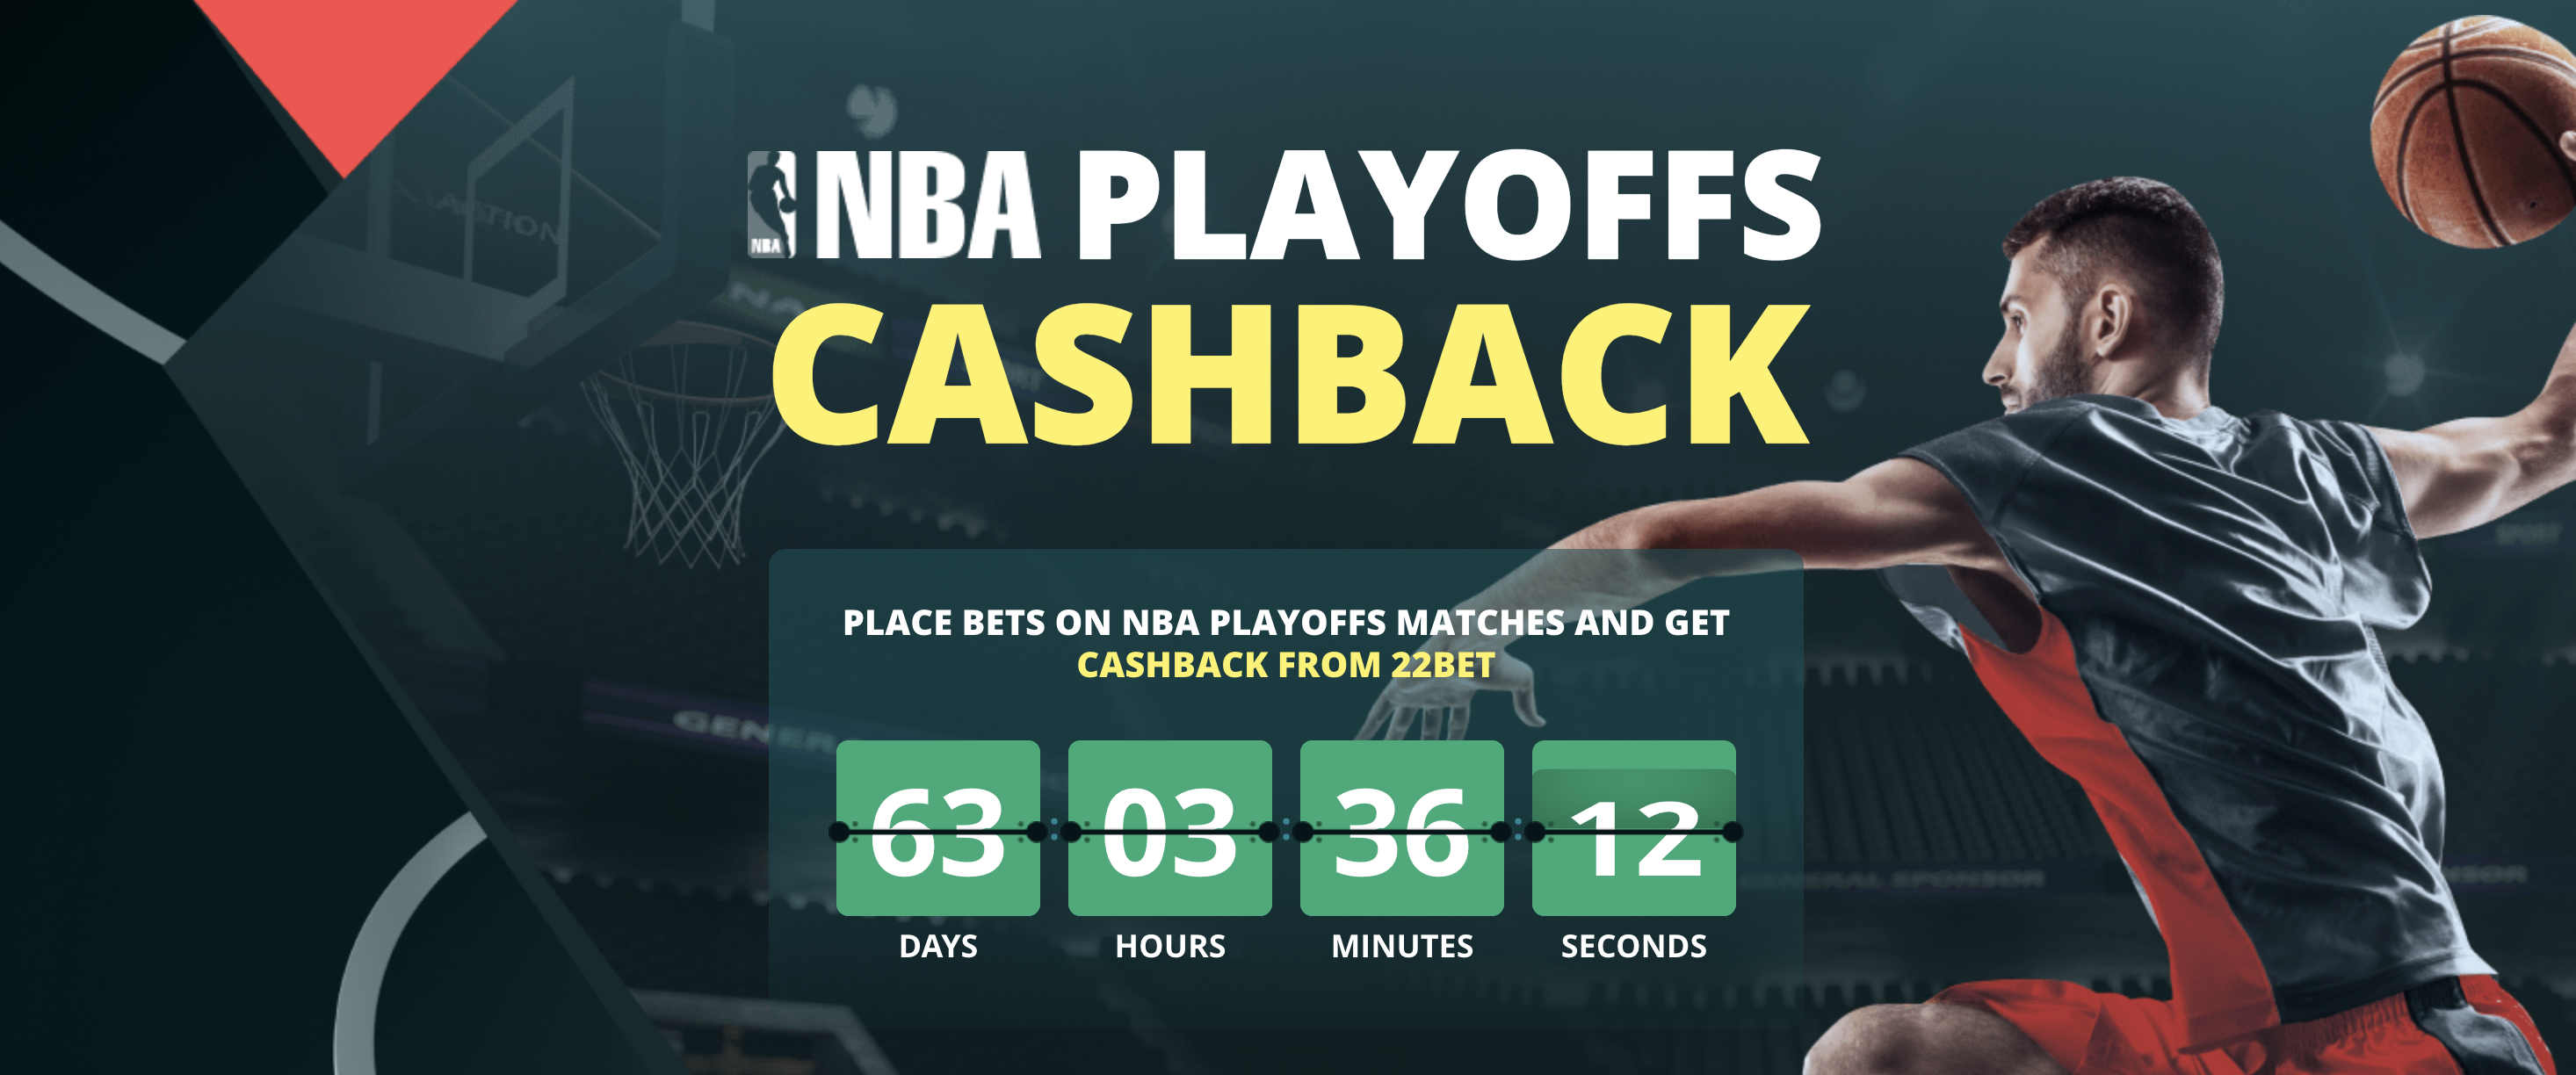 22Bet 15% NBA Playoffs Cashback Bonus up to 100 EUR